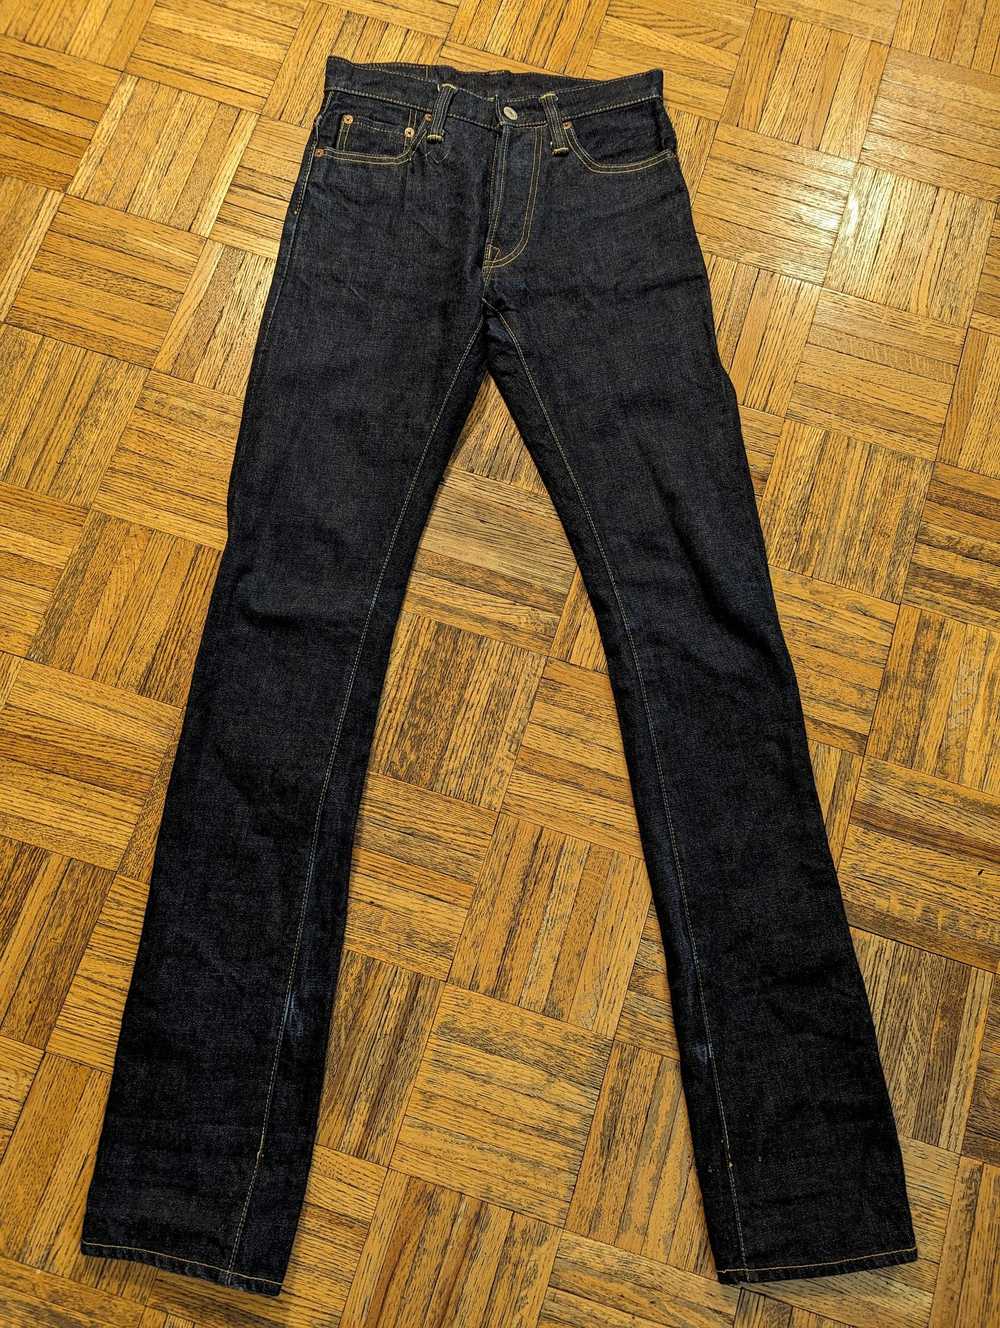 Skull Jeans Selvedge jeans, made in Japan - image 2